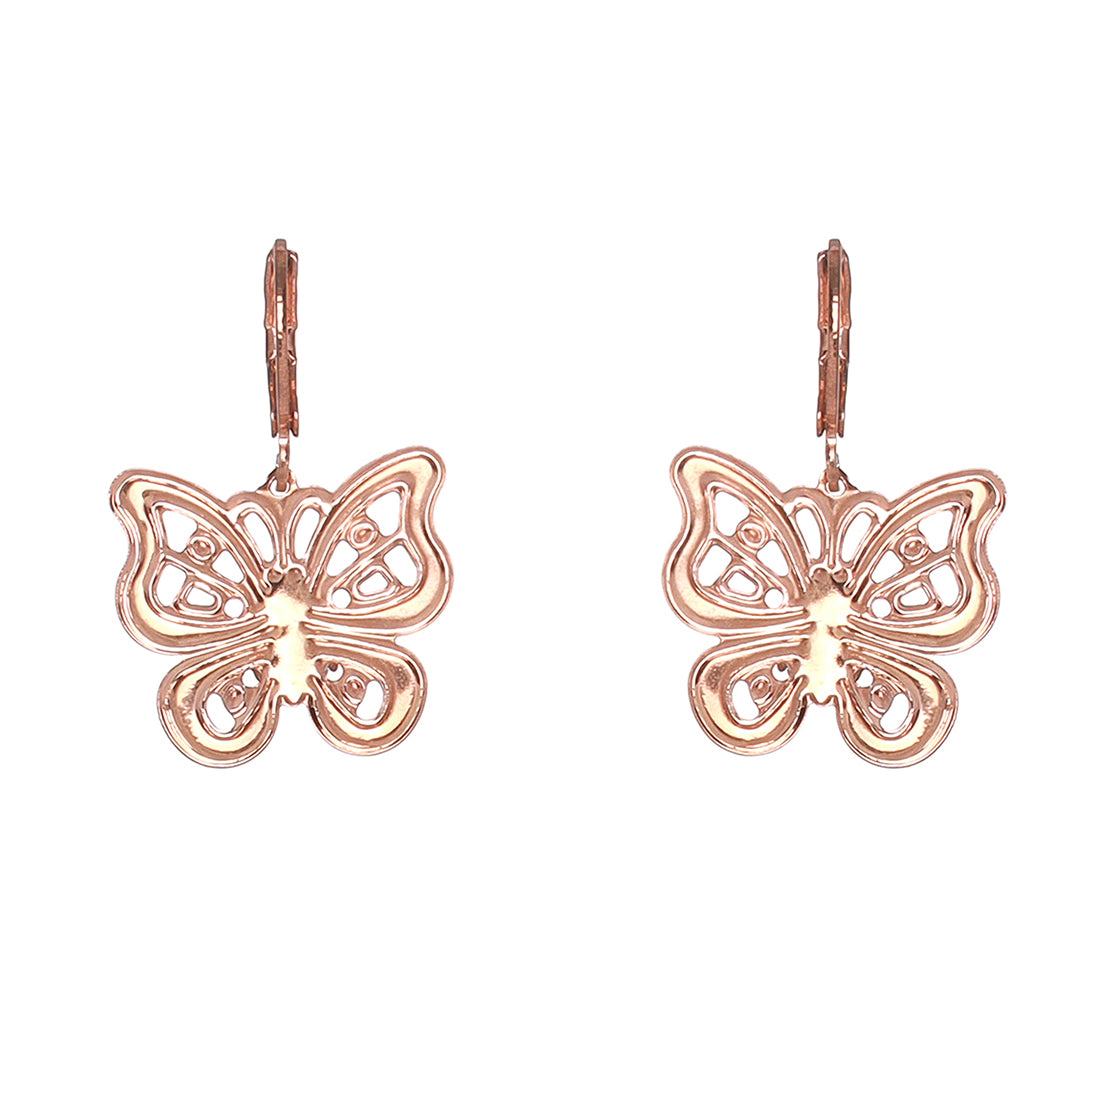 Set of two Silver & Gold Hoop Earrings with Butterfly Dangler